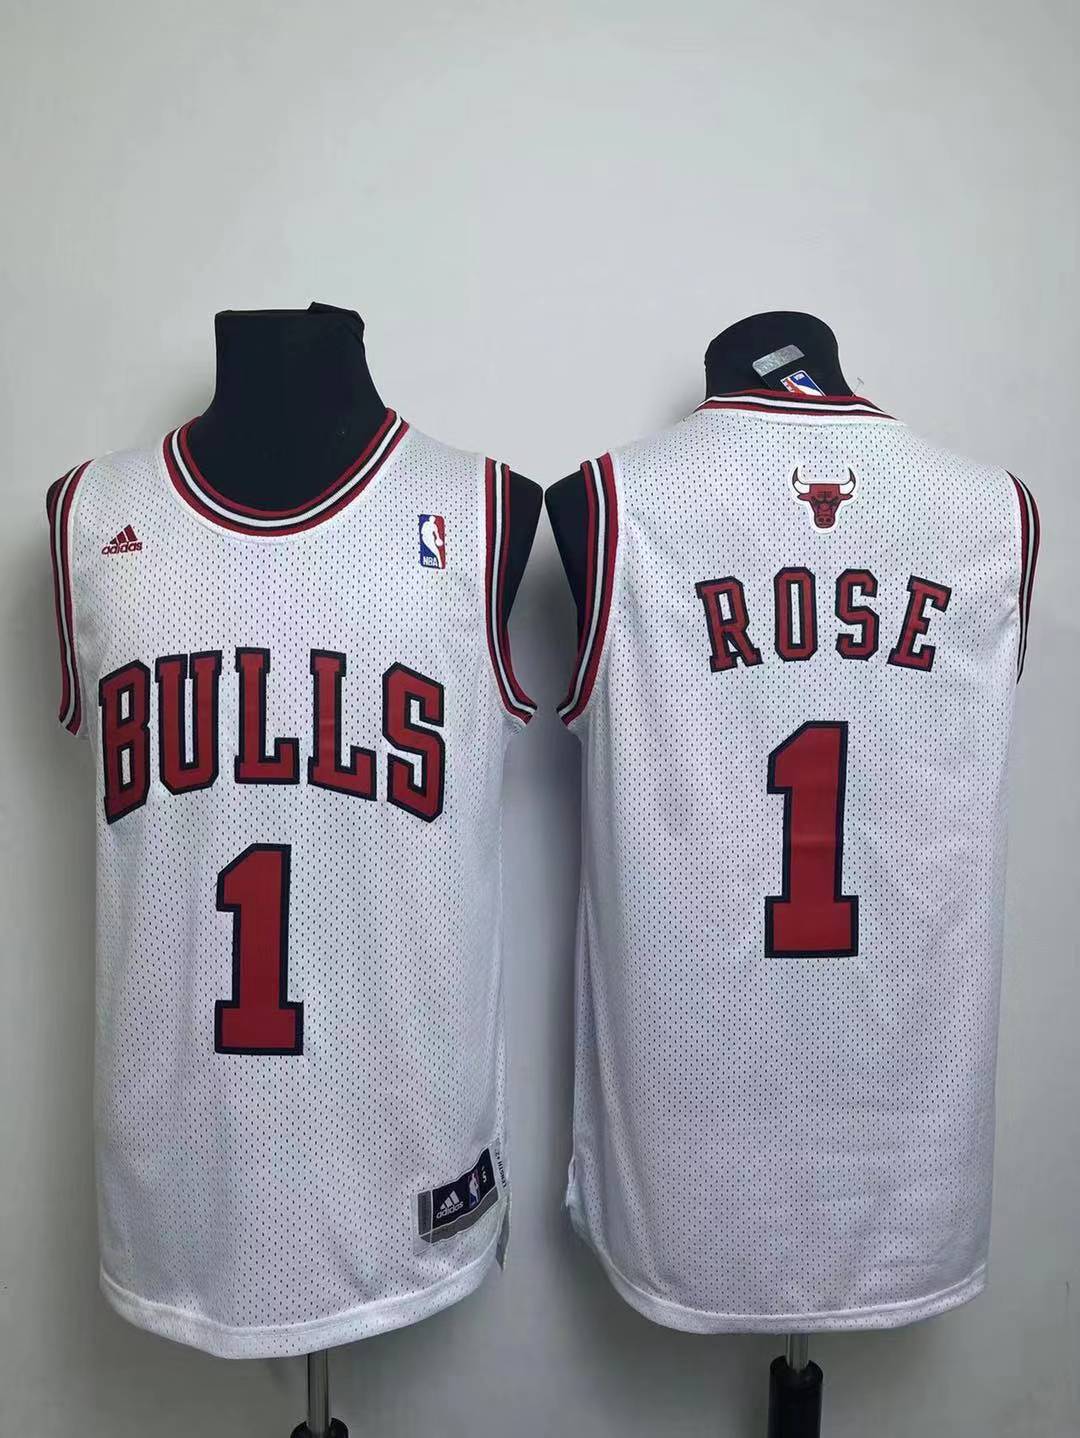 Basketball high quality nba CHICAGO BULLS ROSE jersey